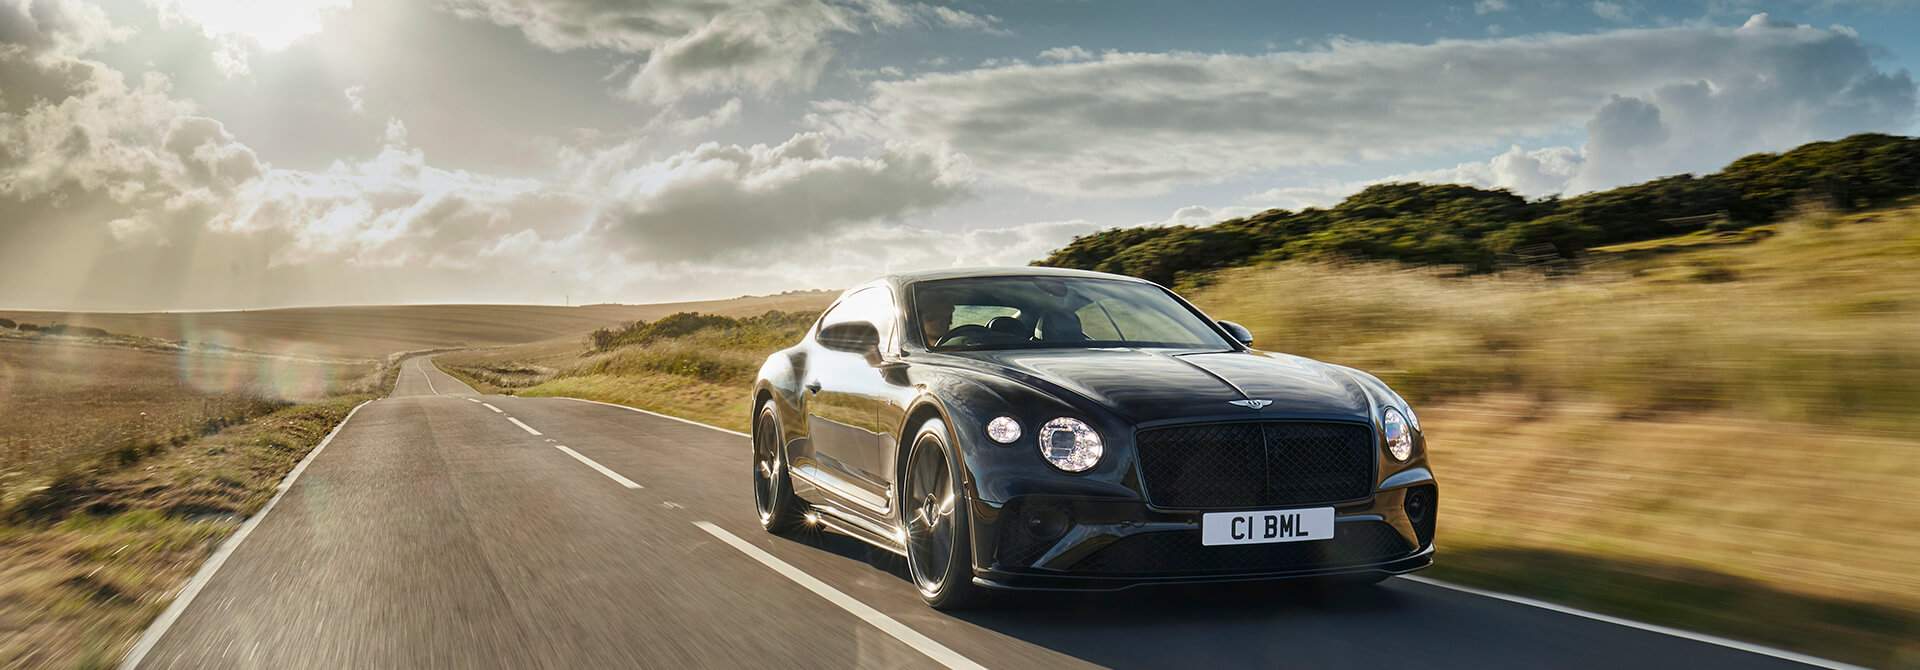 Bentley Continental GT V8 Image